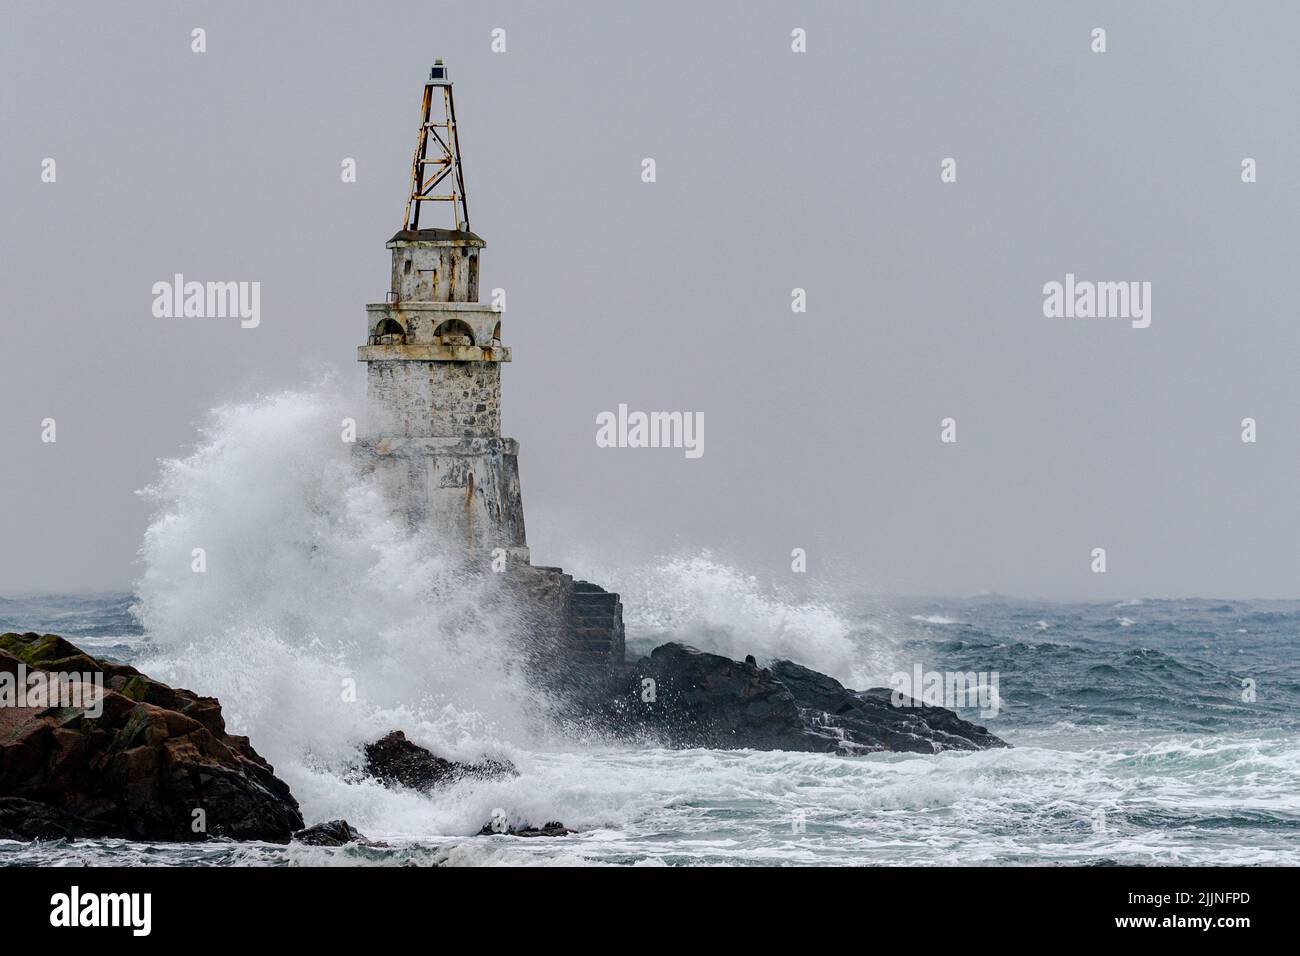 A big storm near an old lighthouse in Achtopol bay, Black sea, Bulgaria Stock Photo